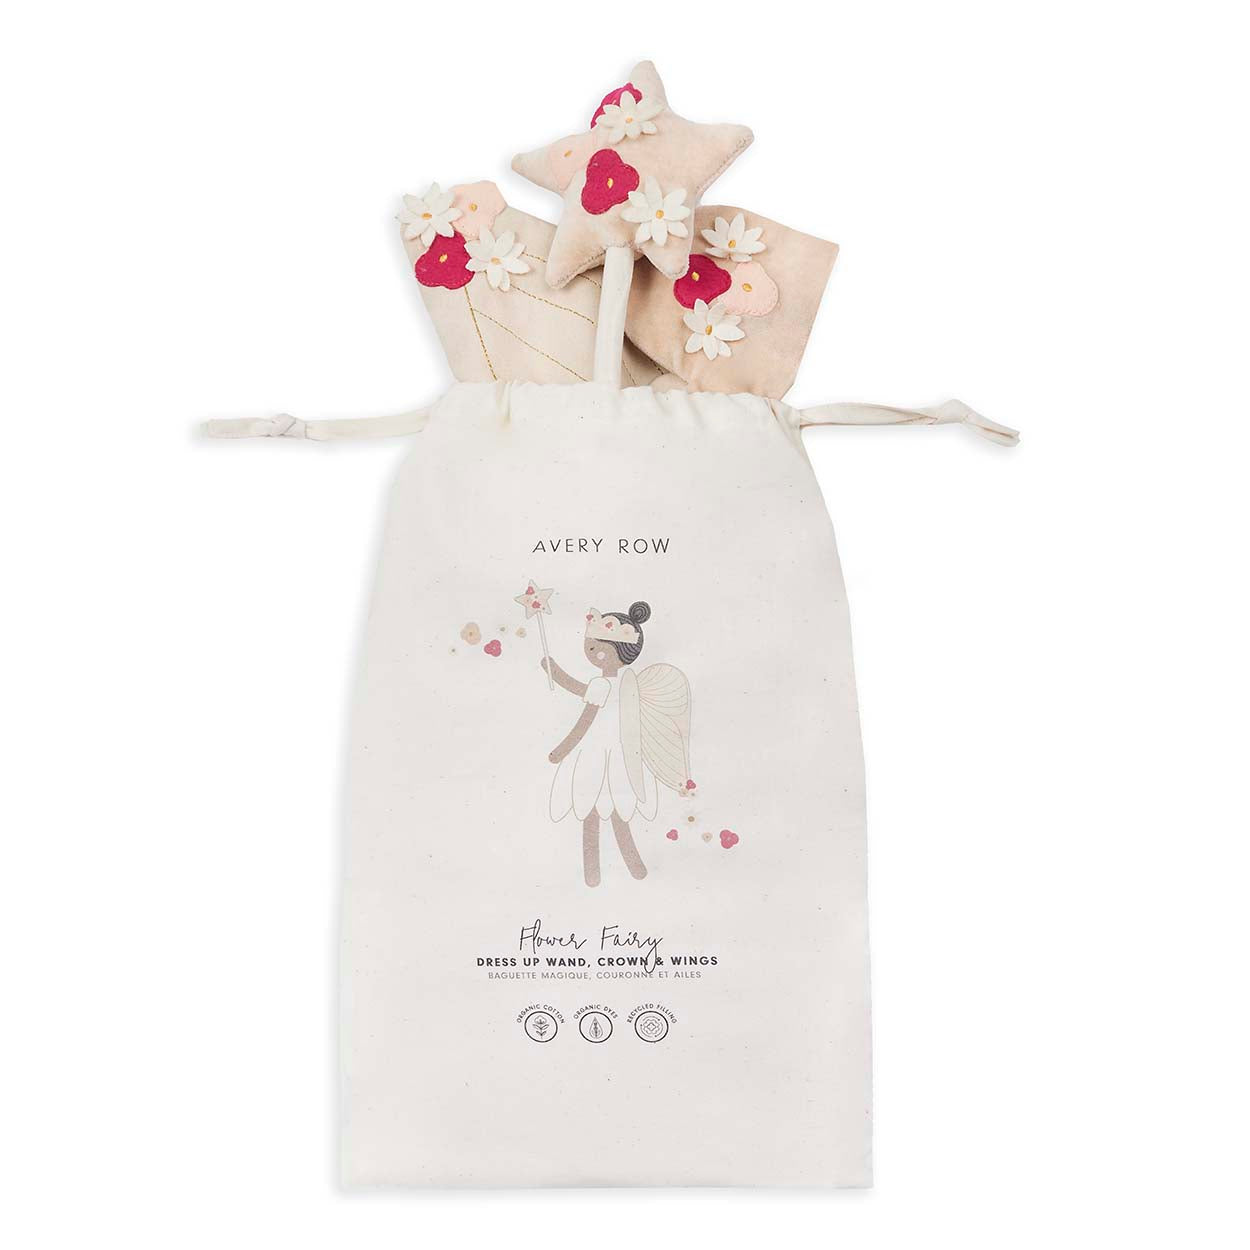 A flower fairy dress up set inside a drawstring gift bag